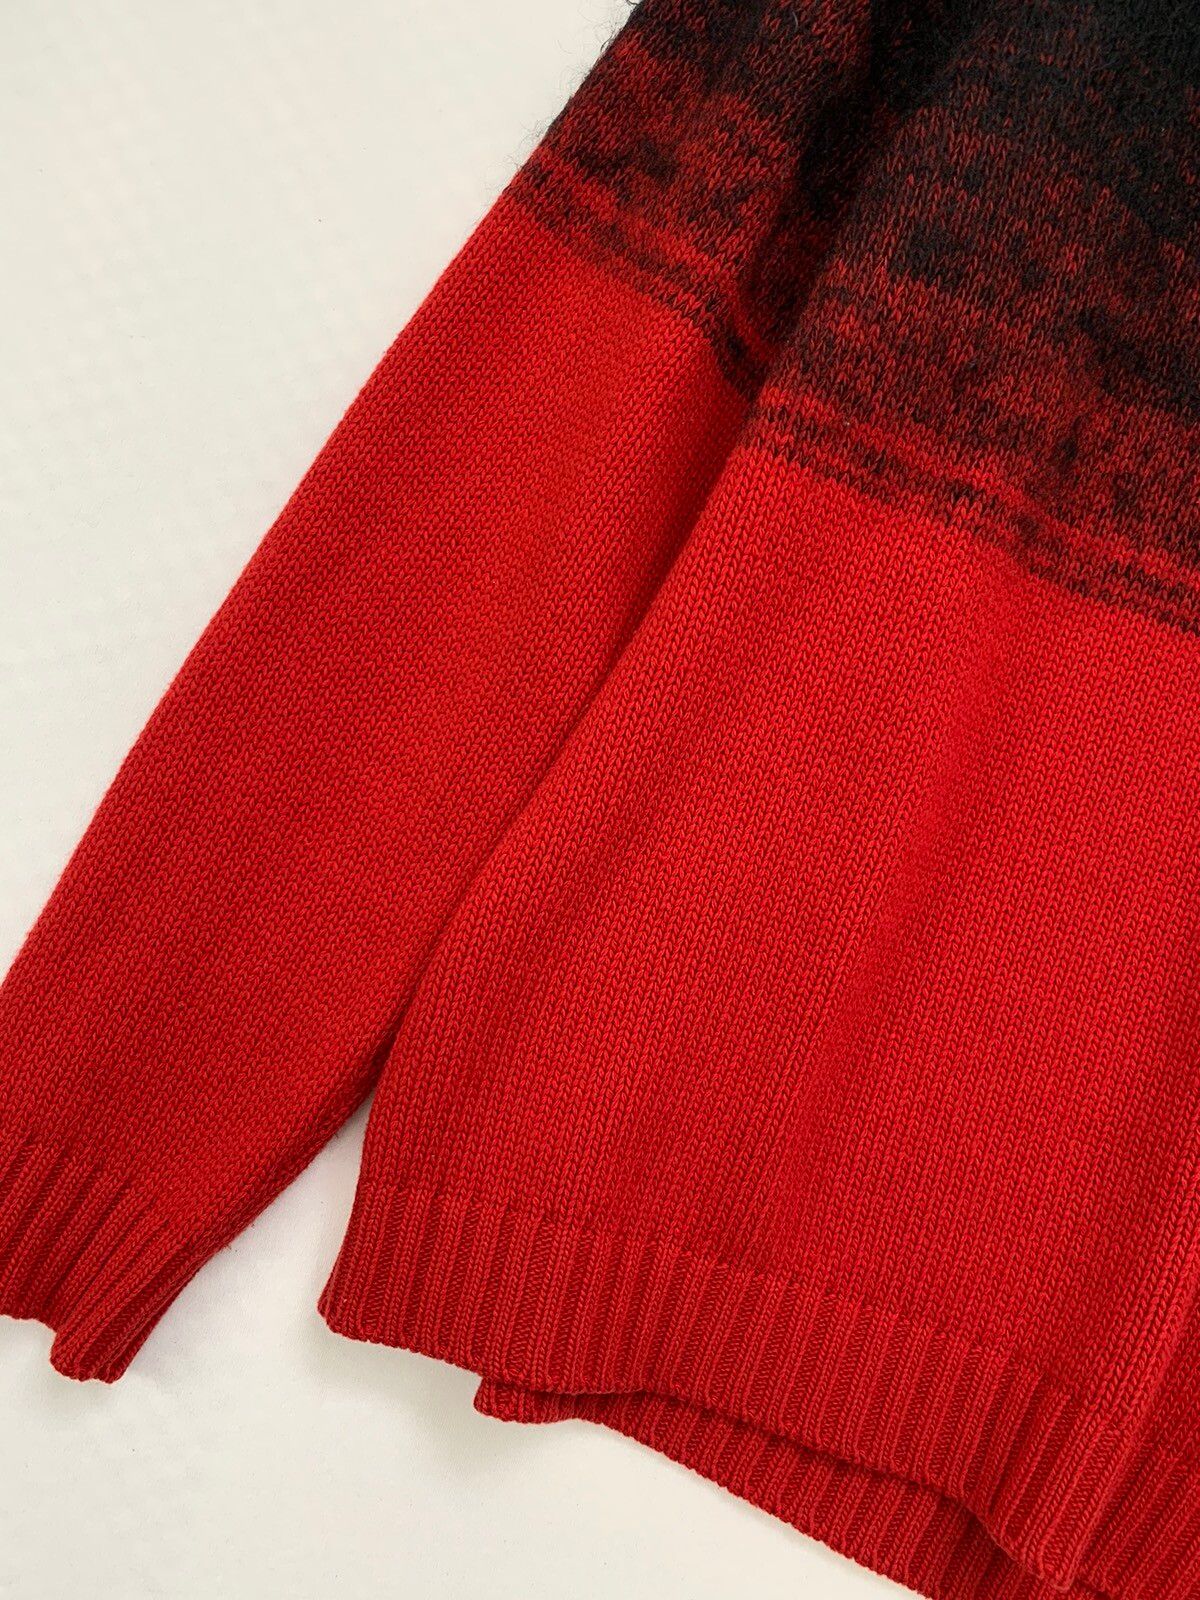 Prada FW2017 mohair wool knit red black Size US M / EU 48-50 / 2 - 4 Thumbnail